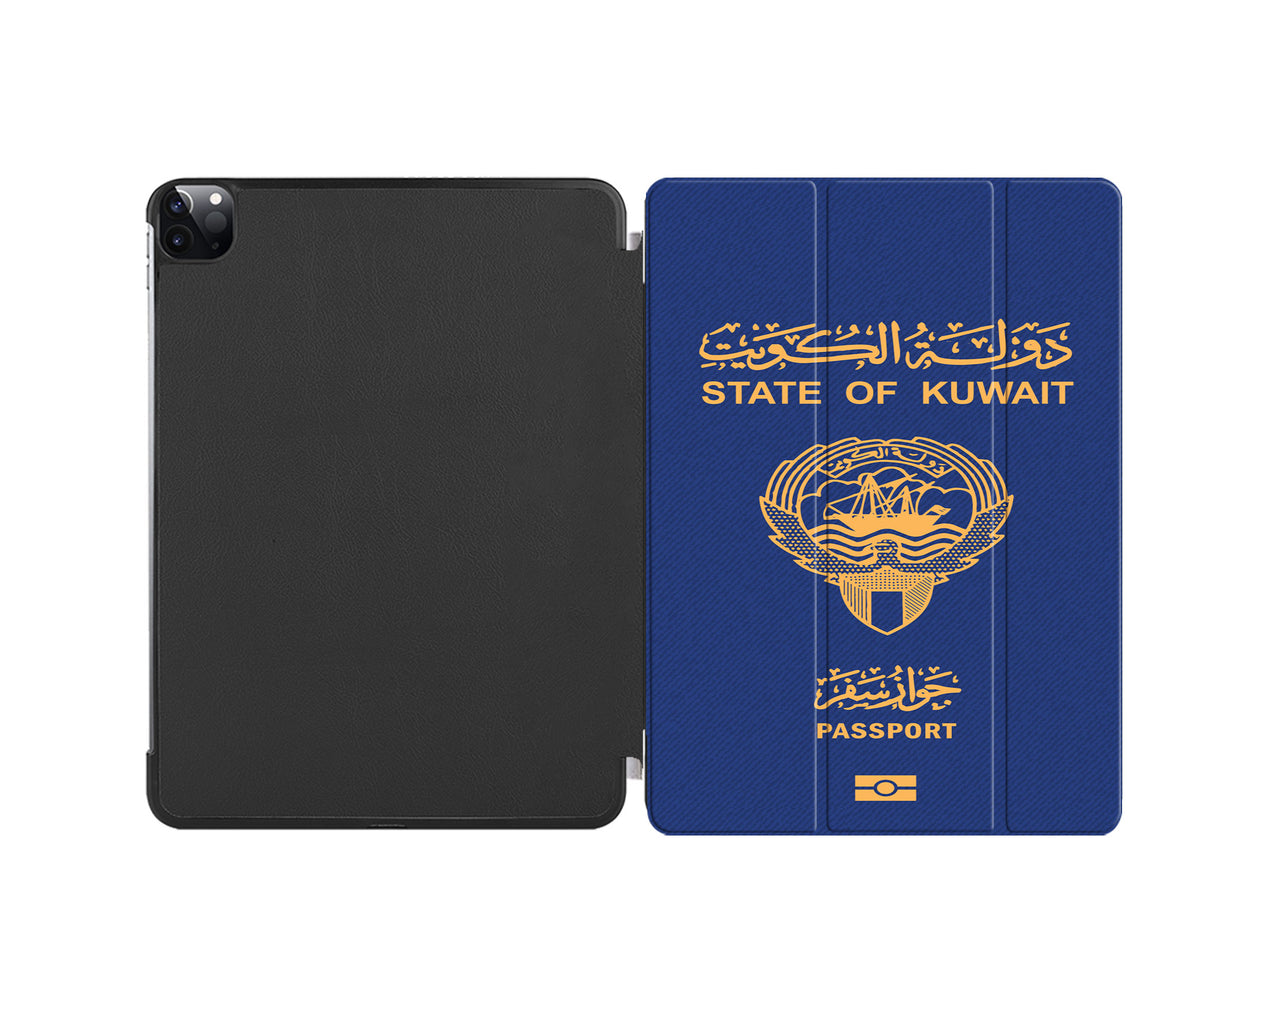 Kuwait Passport Designed iPad Cases